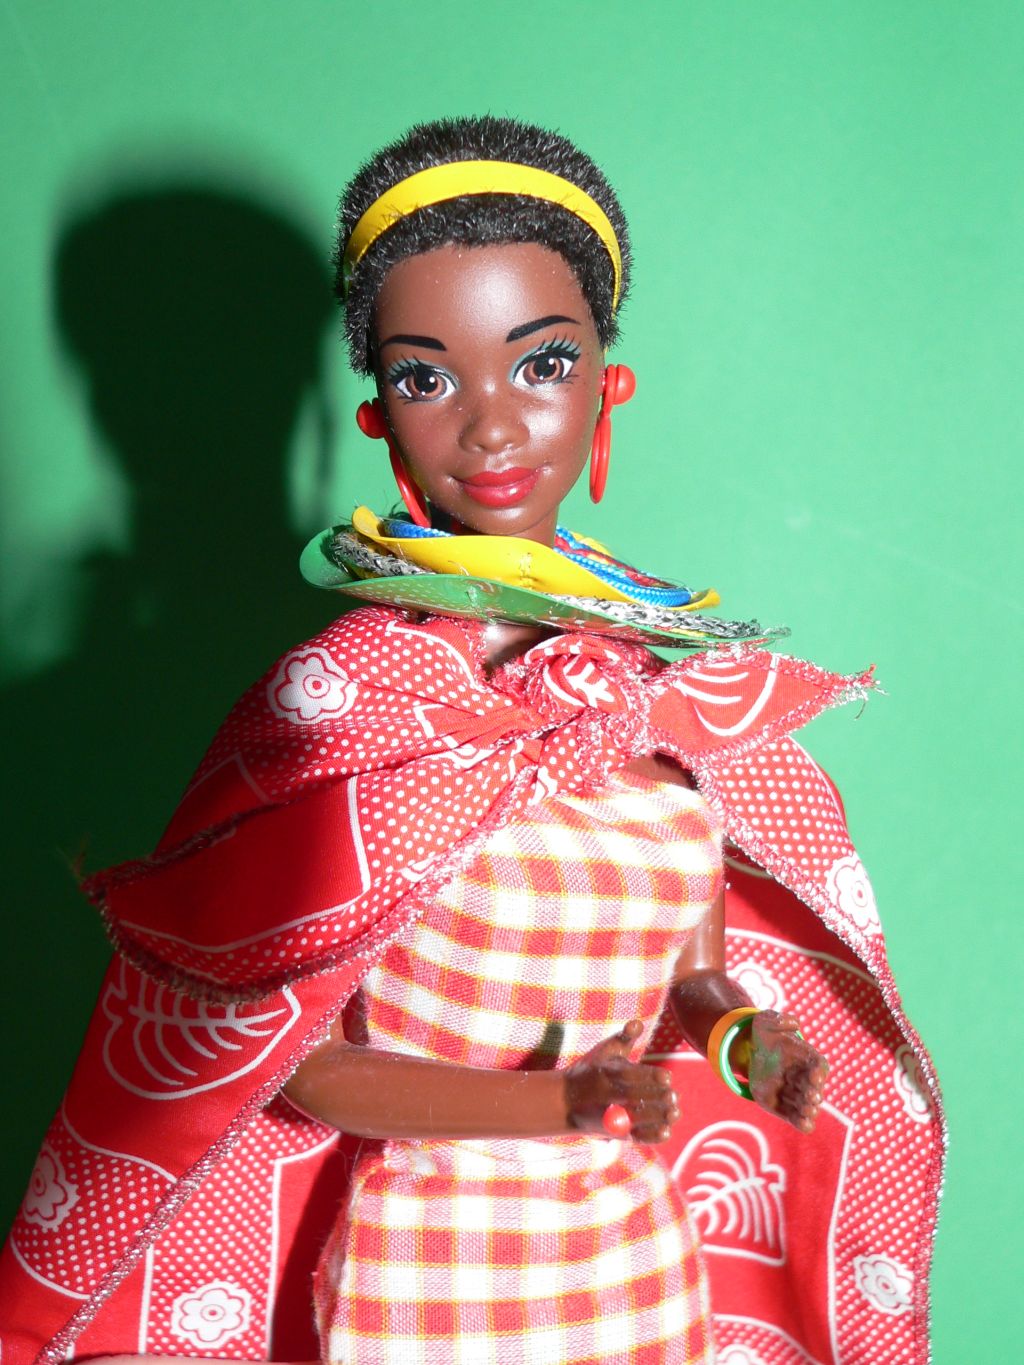 https://blogger.googleusercontent.com/img/b/R29vZ2xl/AVvXsEh0xzri4pXJTA2So7N09dF04mW4YQLp629EfGNaNZ31tk5lFC9iPPEvY54TQvKnLKua6hP3EXGD1EVPOBMGntPJuJ3UtMgIR85ud_XEg8dSdIe-dtWpEIA1I6jhaRgFI-WDw0lqu2DIAXQ/s1600/Barbie+Kenya+4.jpg